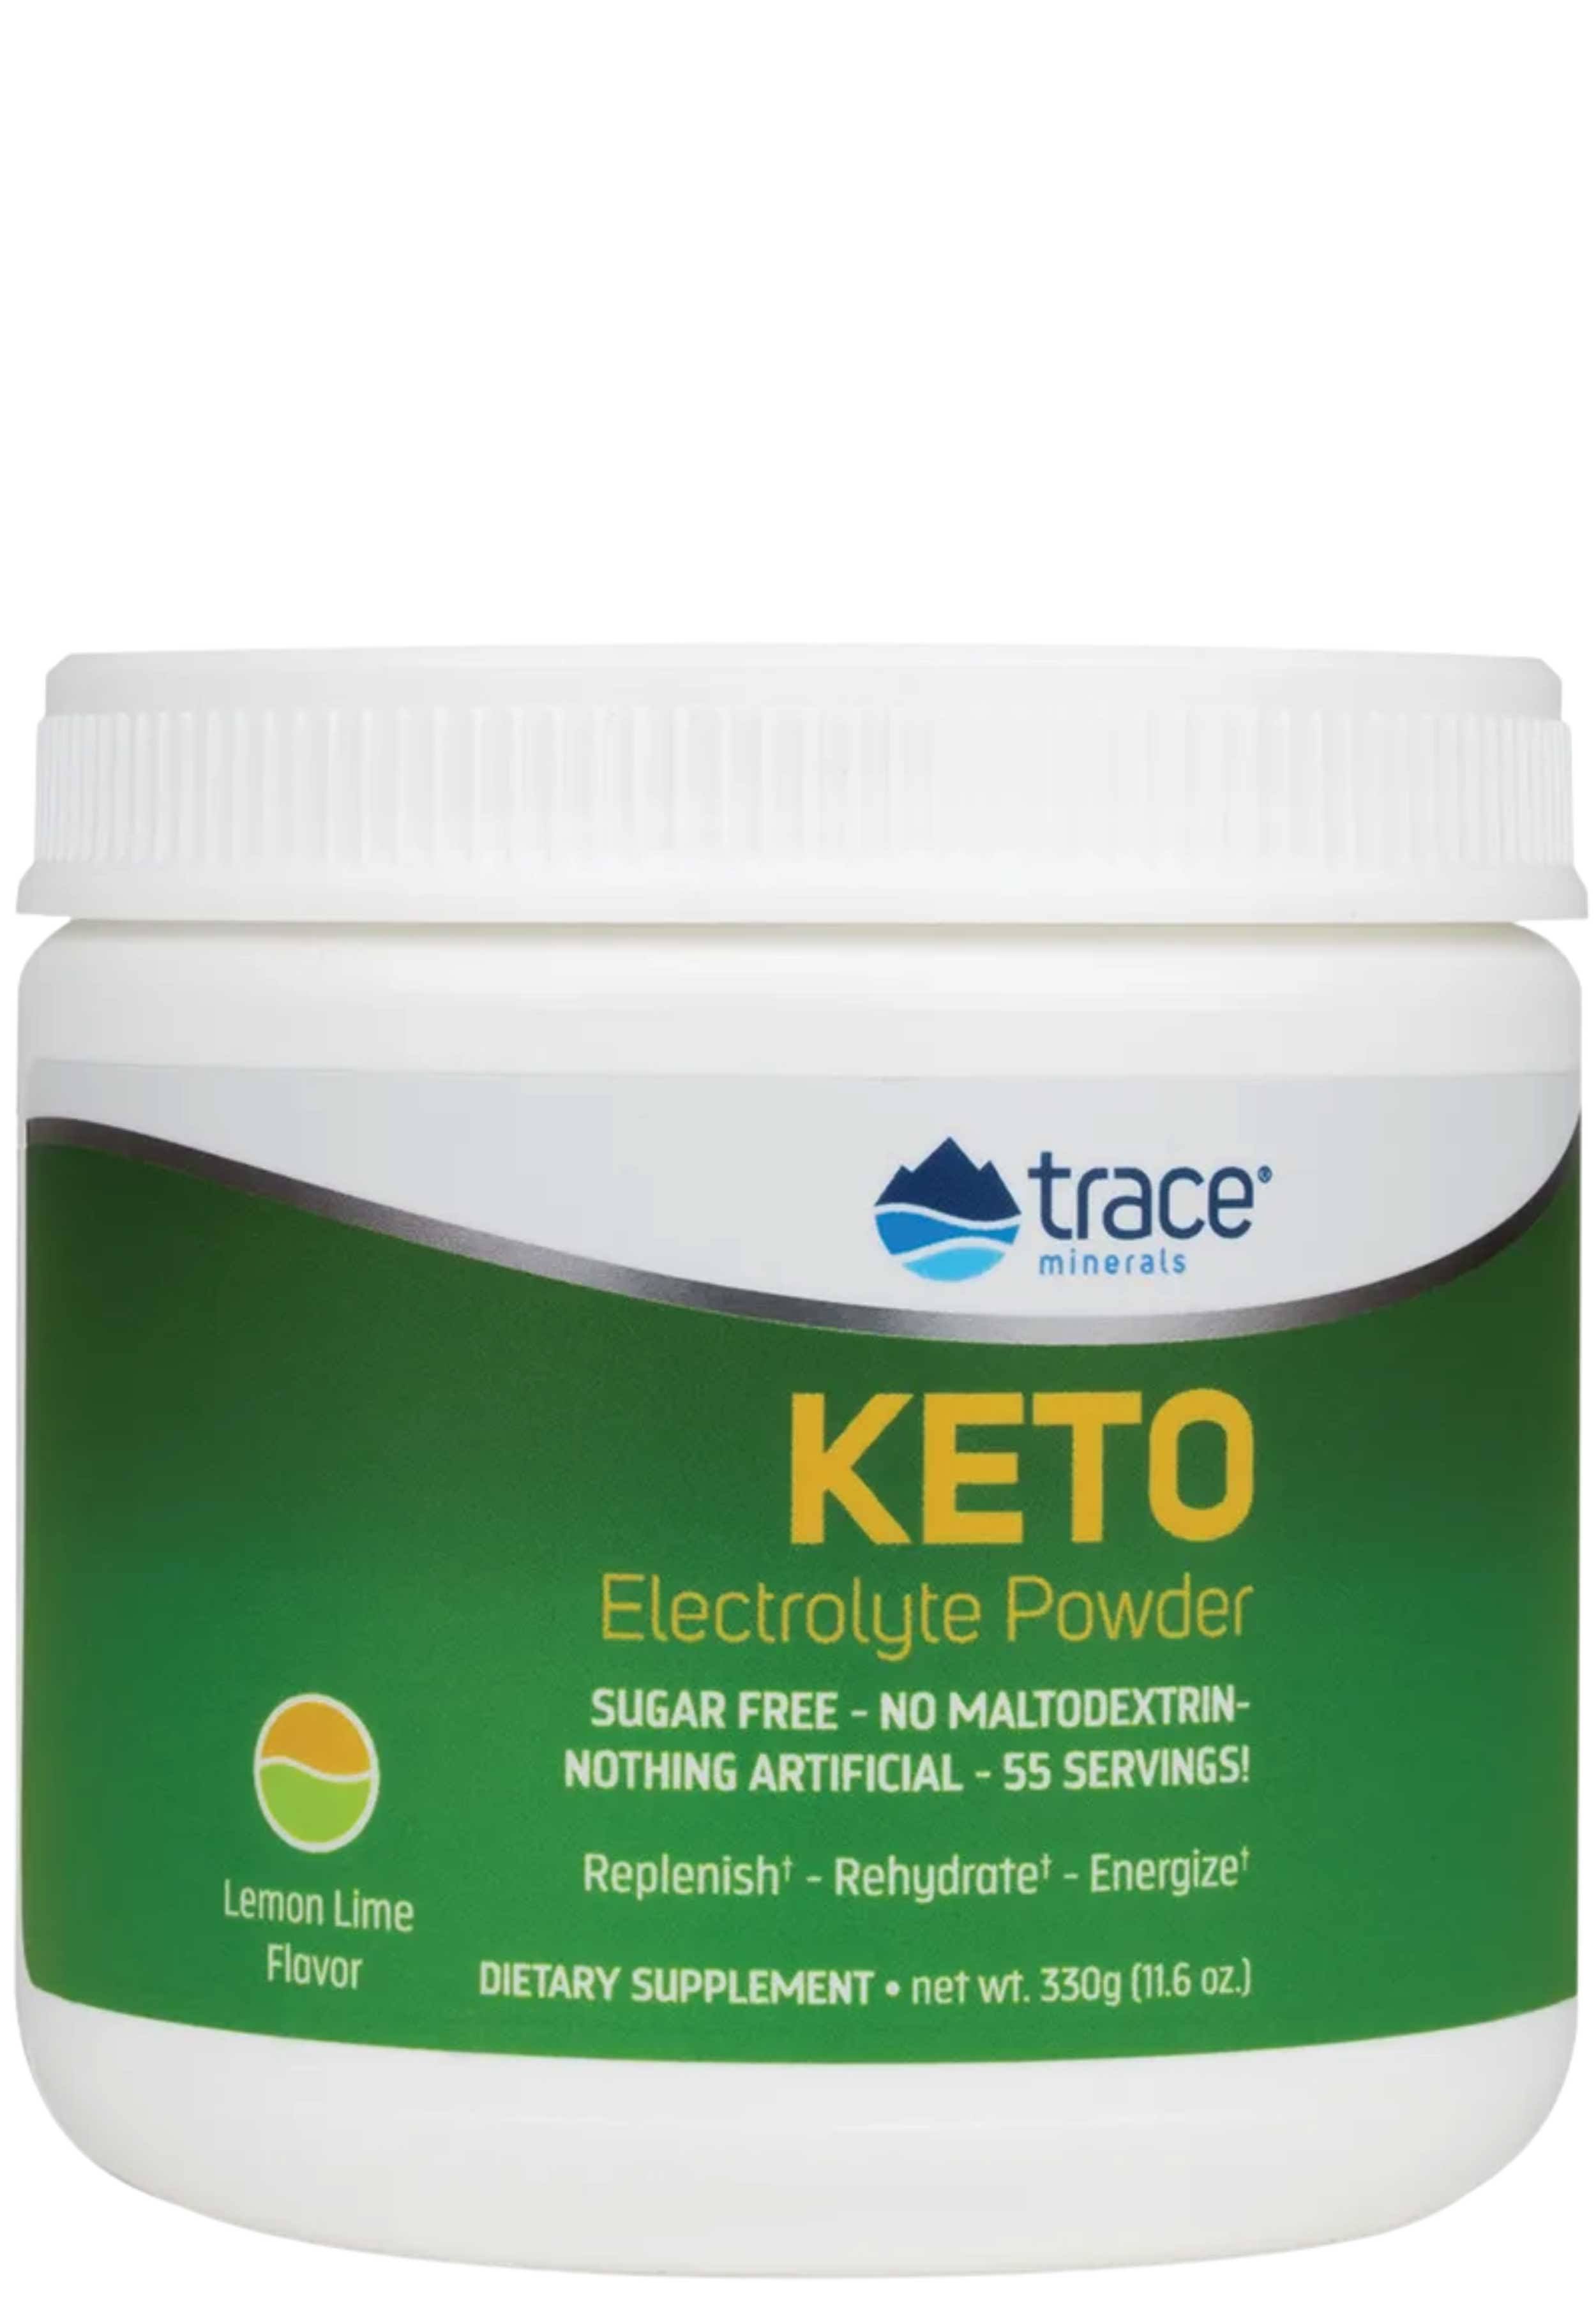 Trace Minerals, Keto Electrolyte Powder, Lemon Lime, Sugar Free, Reple